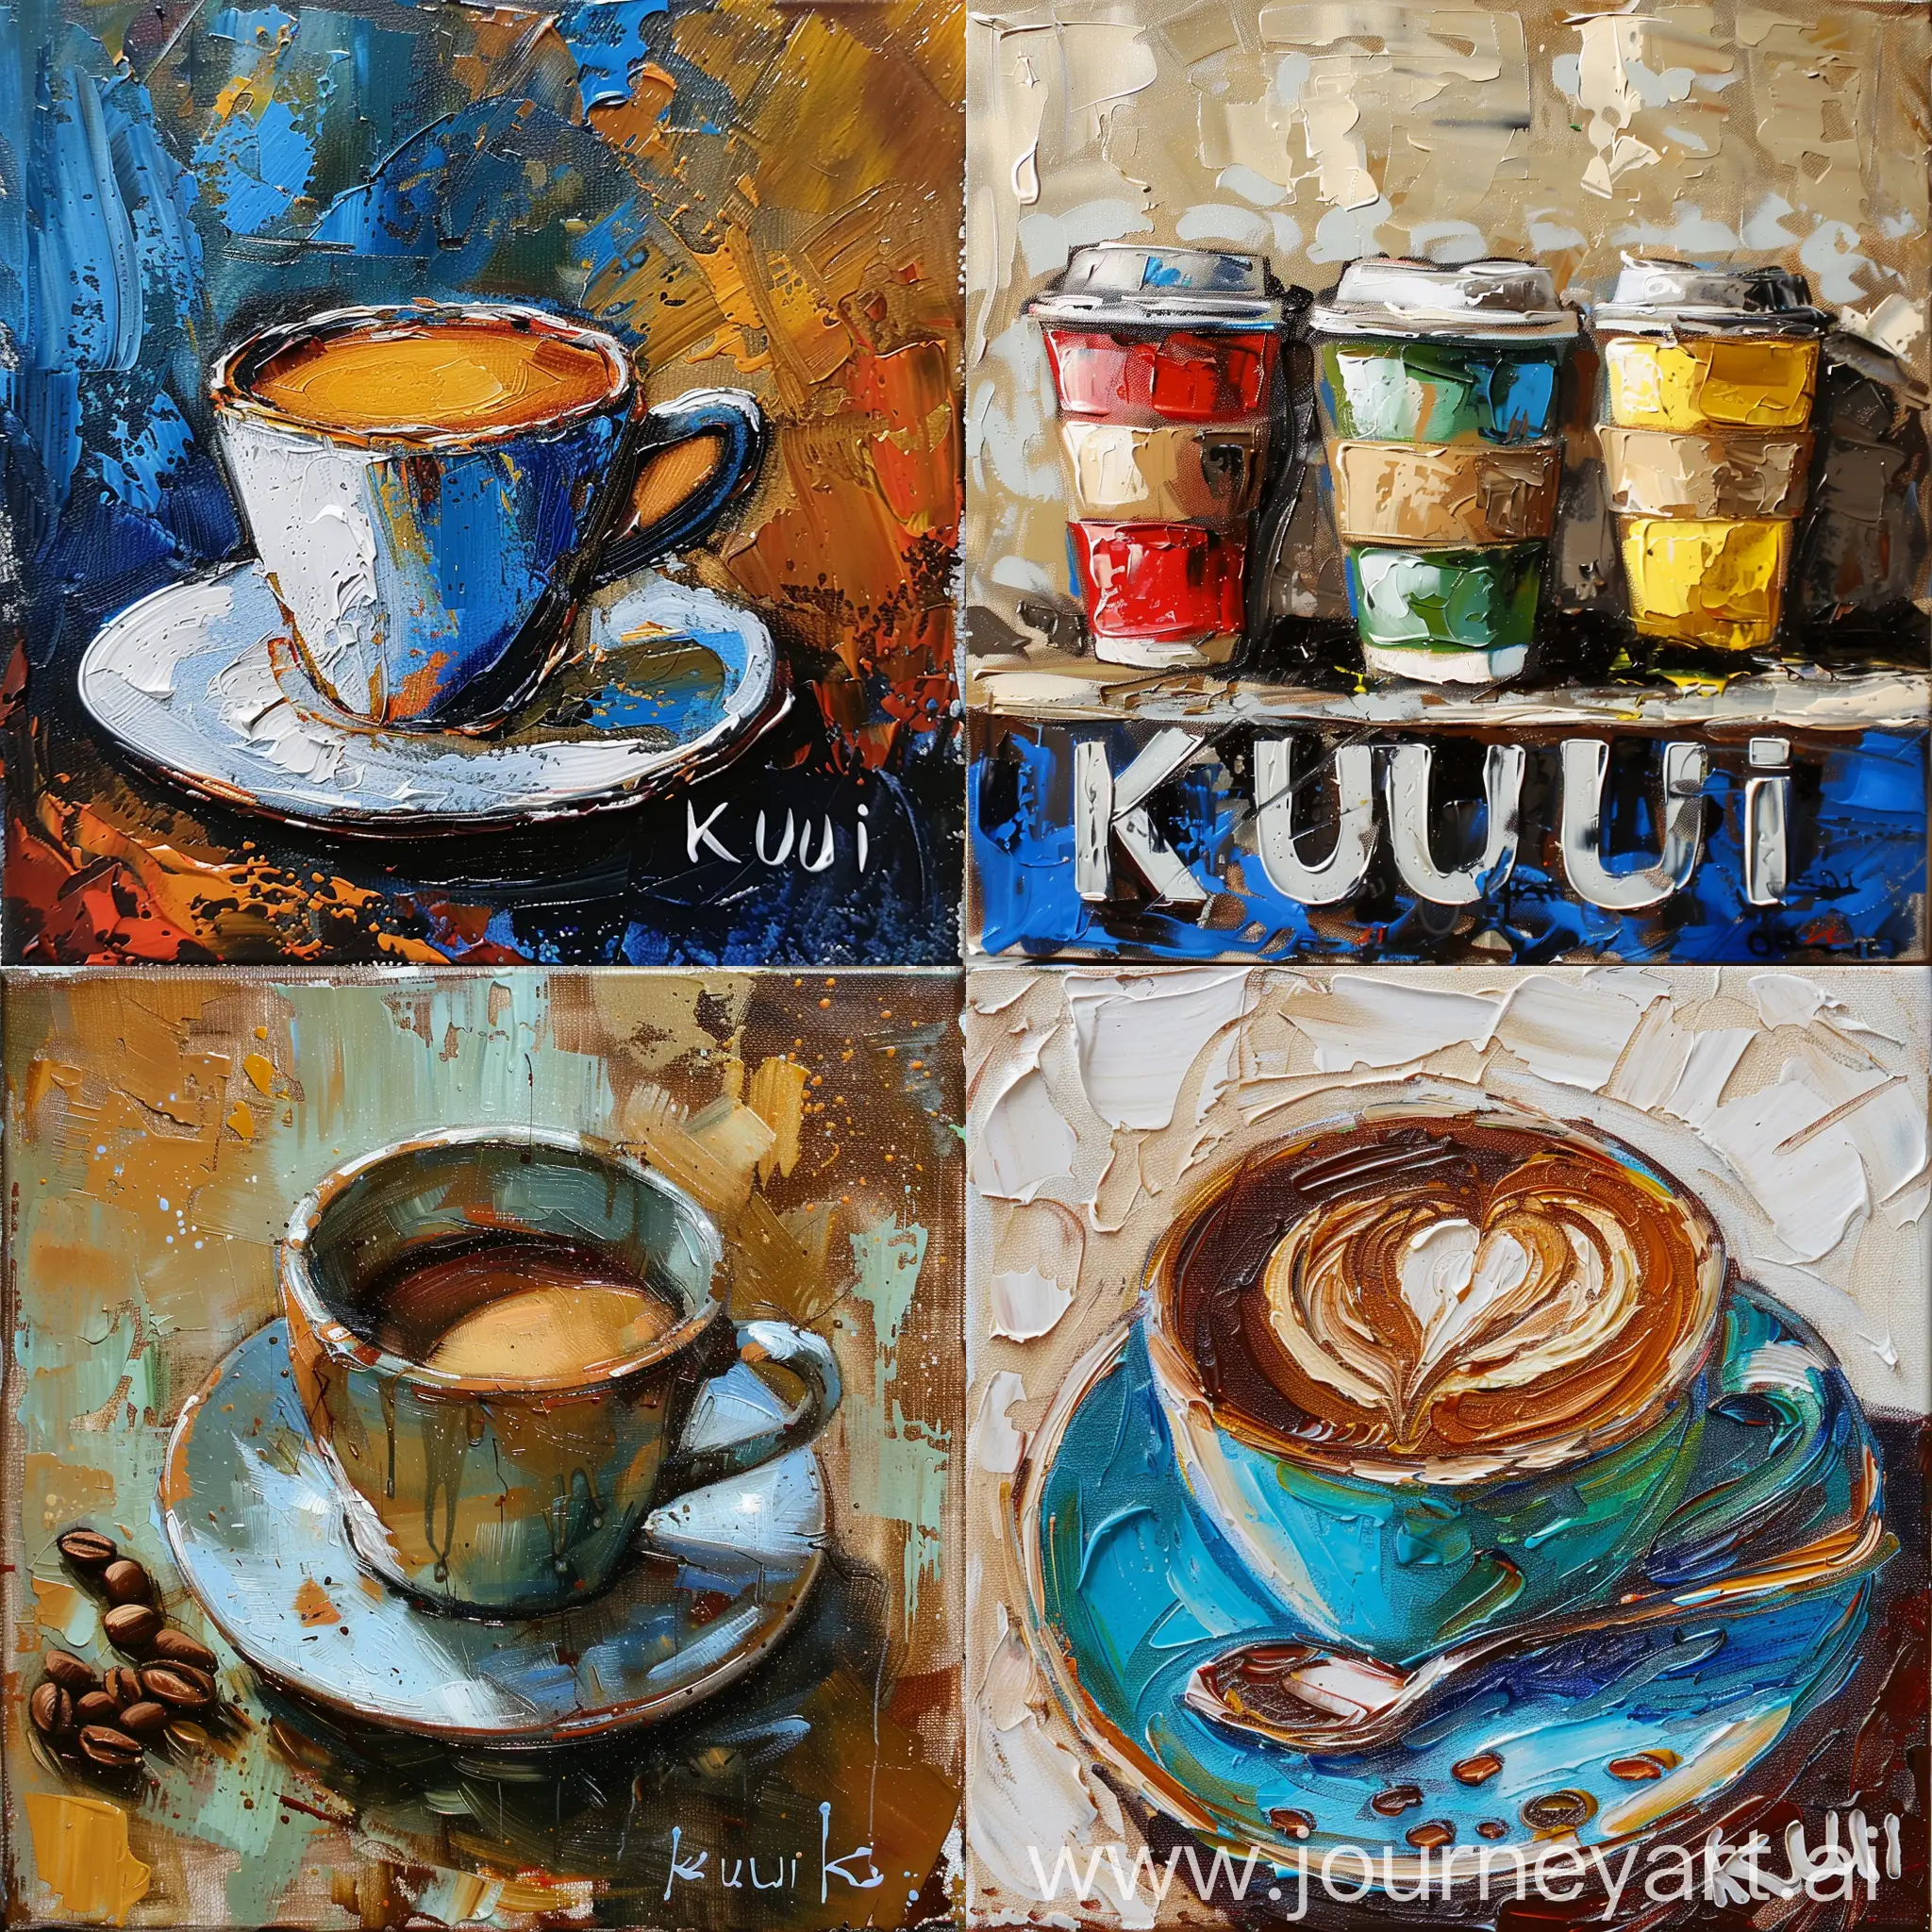 Cozy-Coffee-Shop-Scene-with-Kudi-Coffee-Promotion